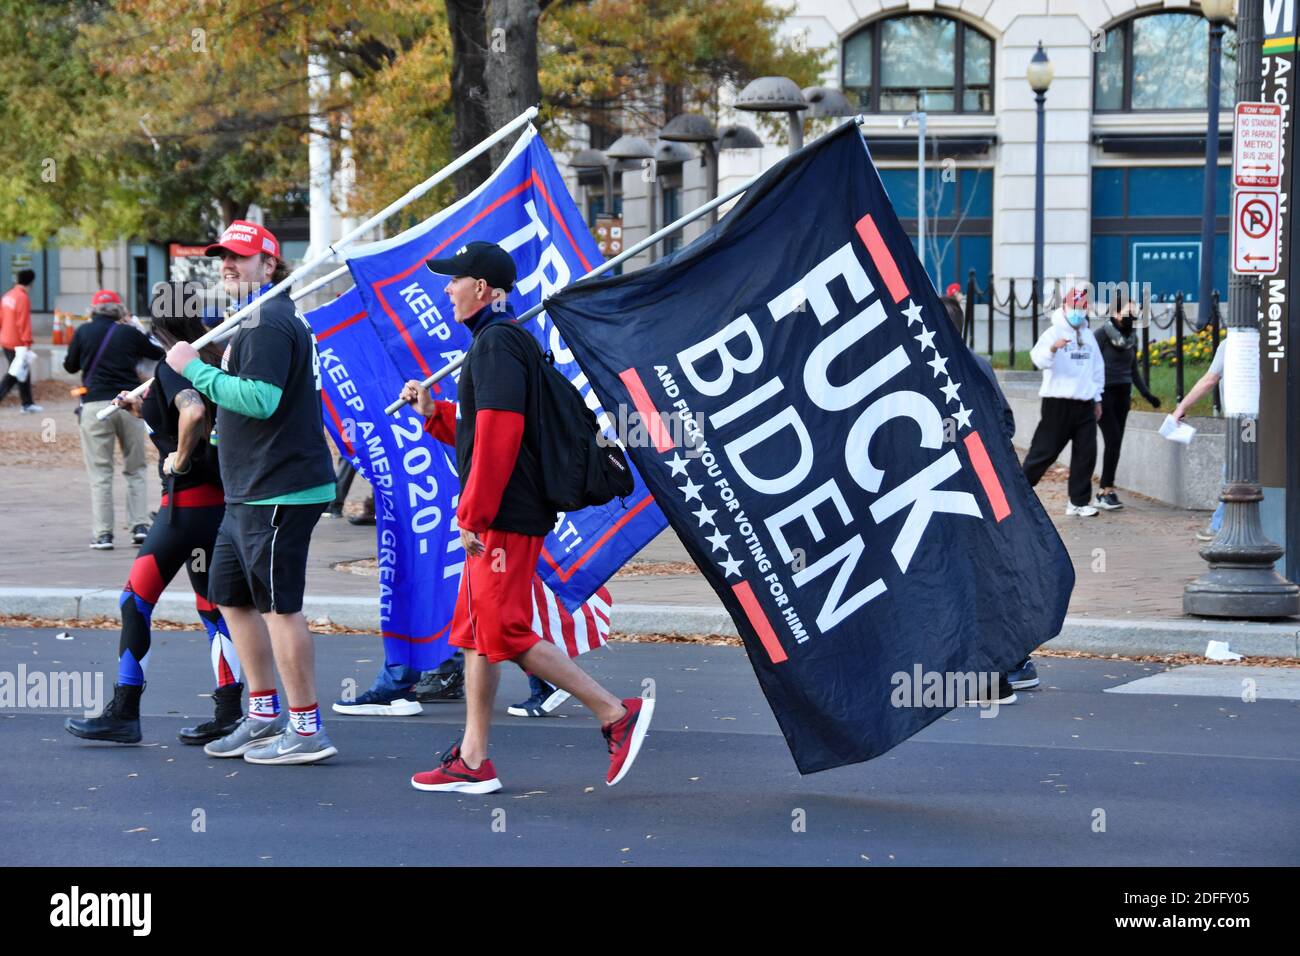 Washington DC. November 14, 2020. Million Maga March. Three men wearing shorts walking with Trump flags and F Biden flag. Stock Photo